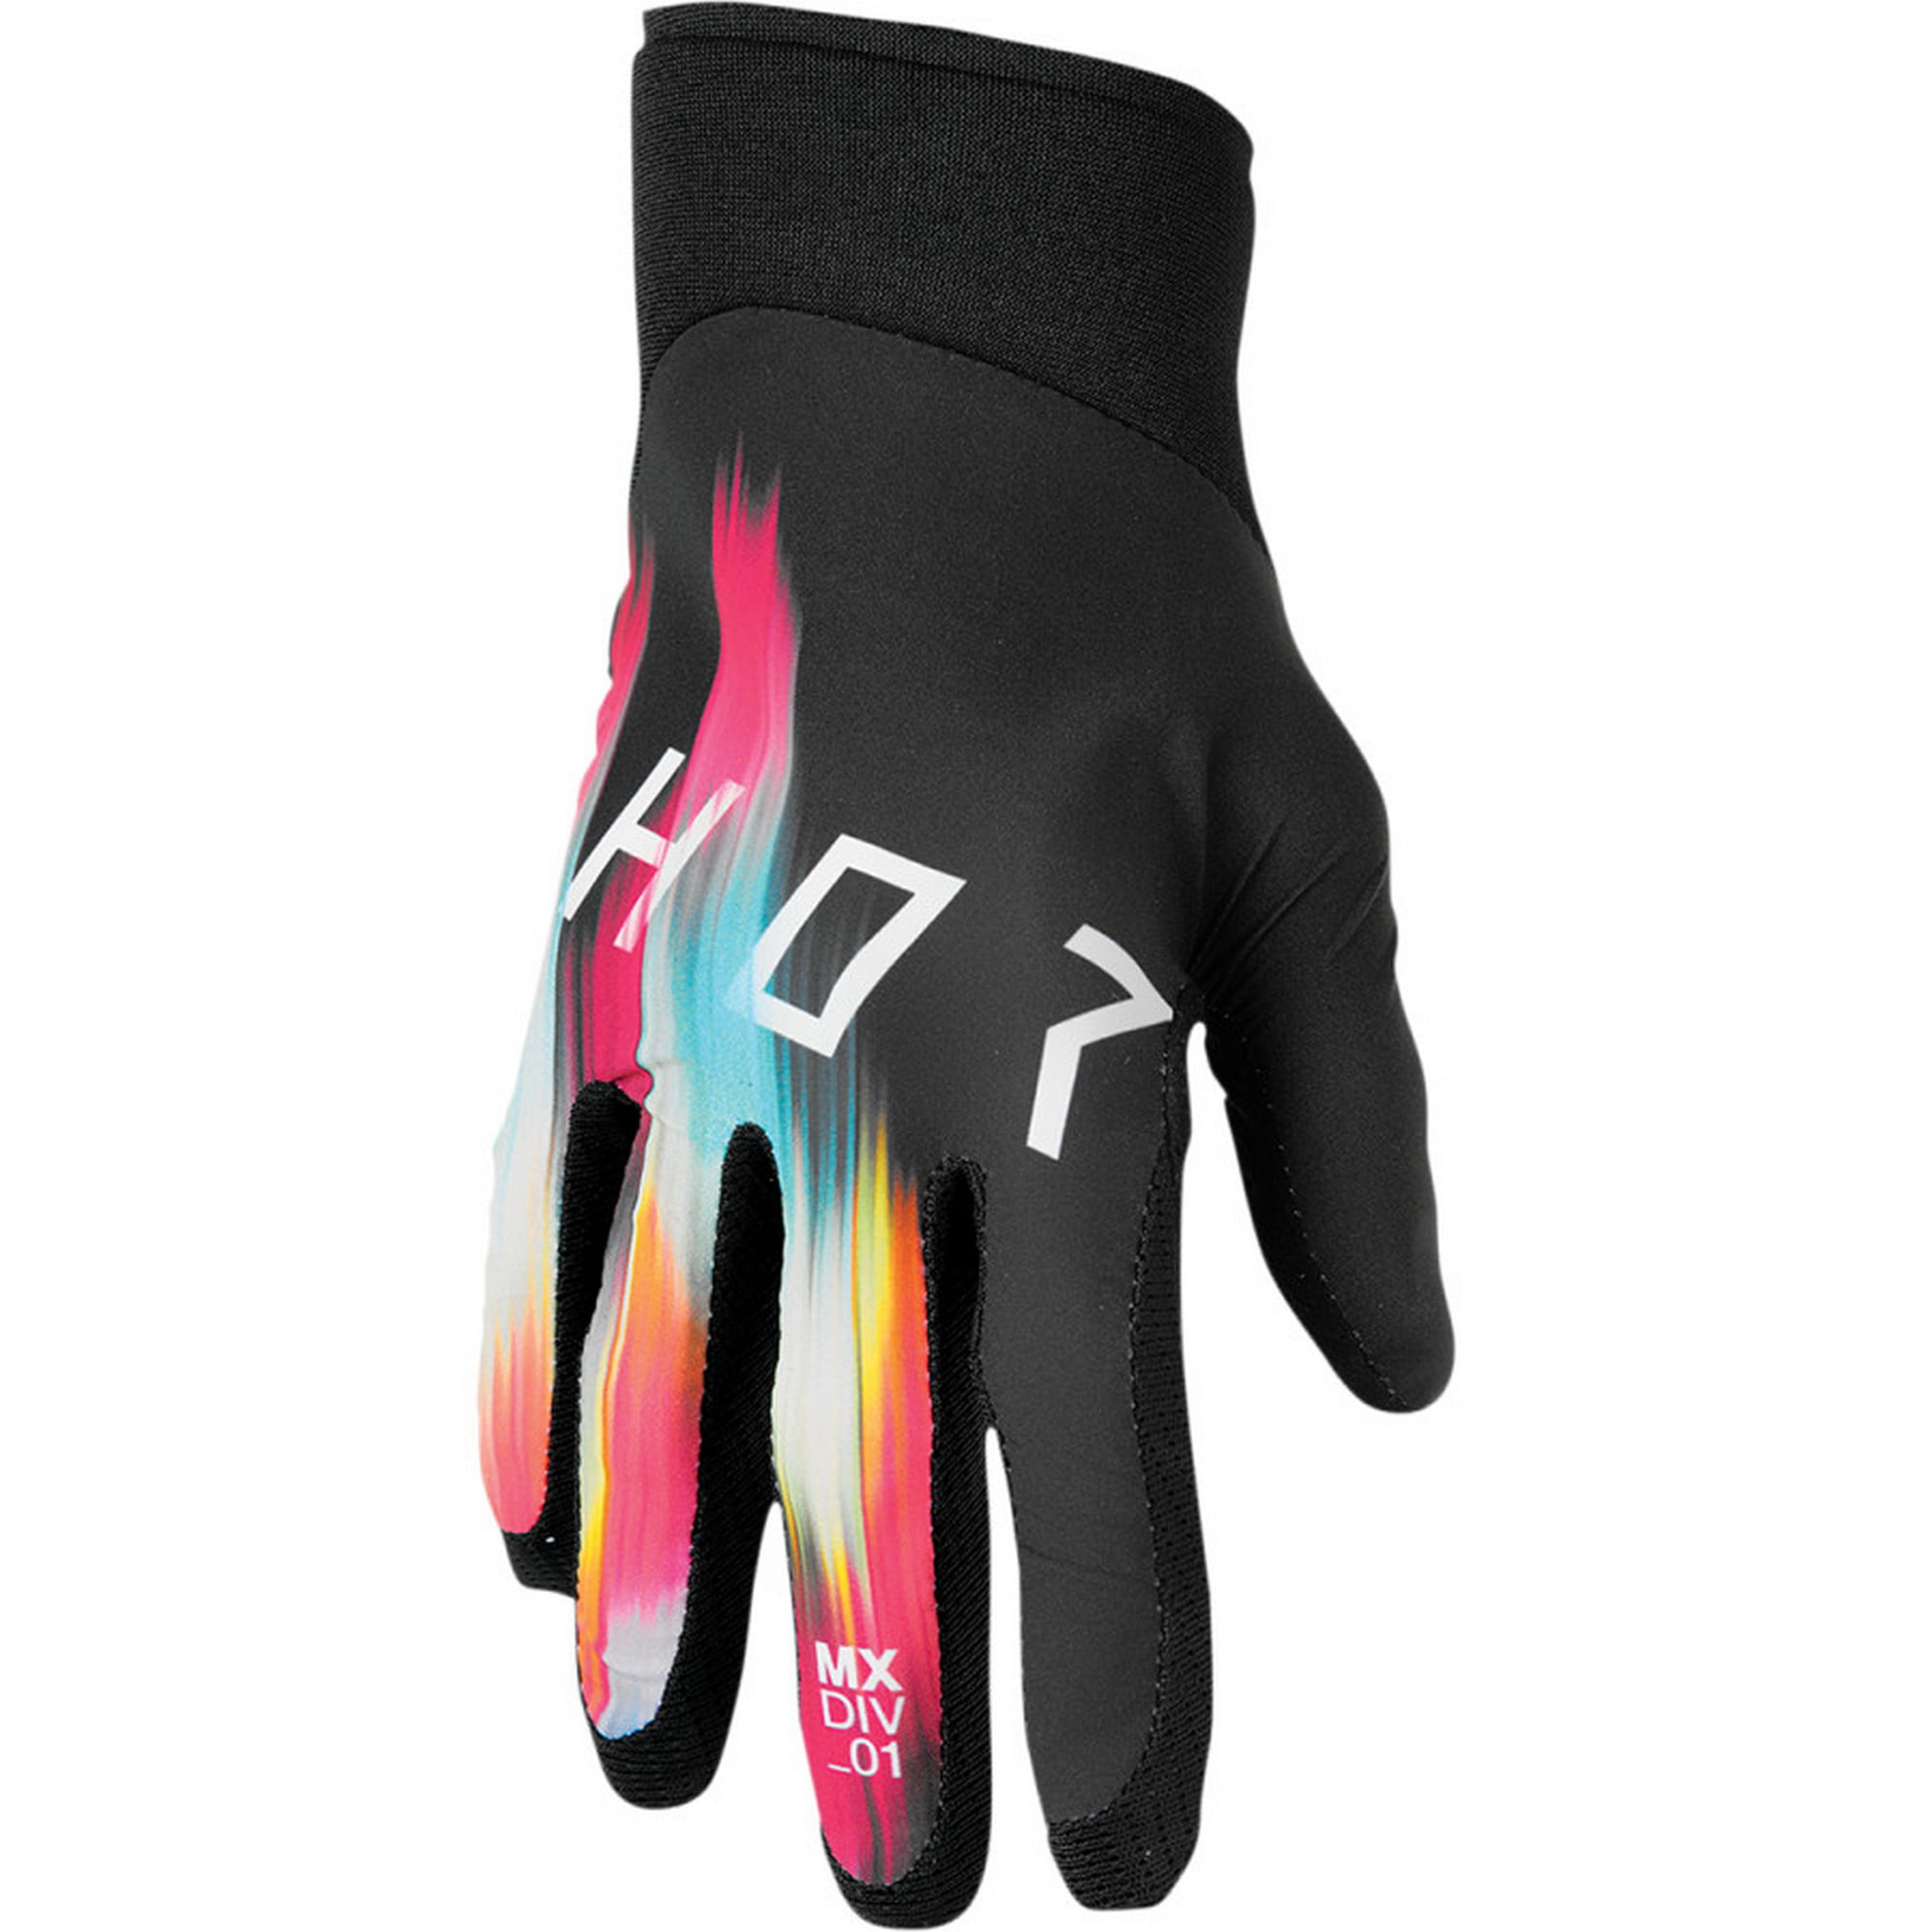 All Sizes Black Thor Agile MX Gloves 